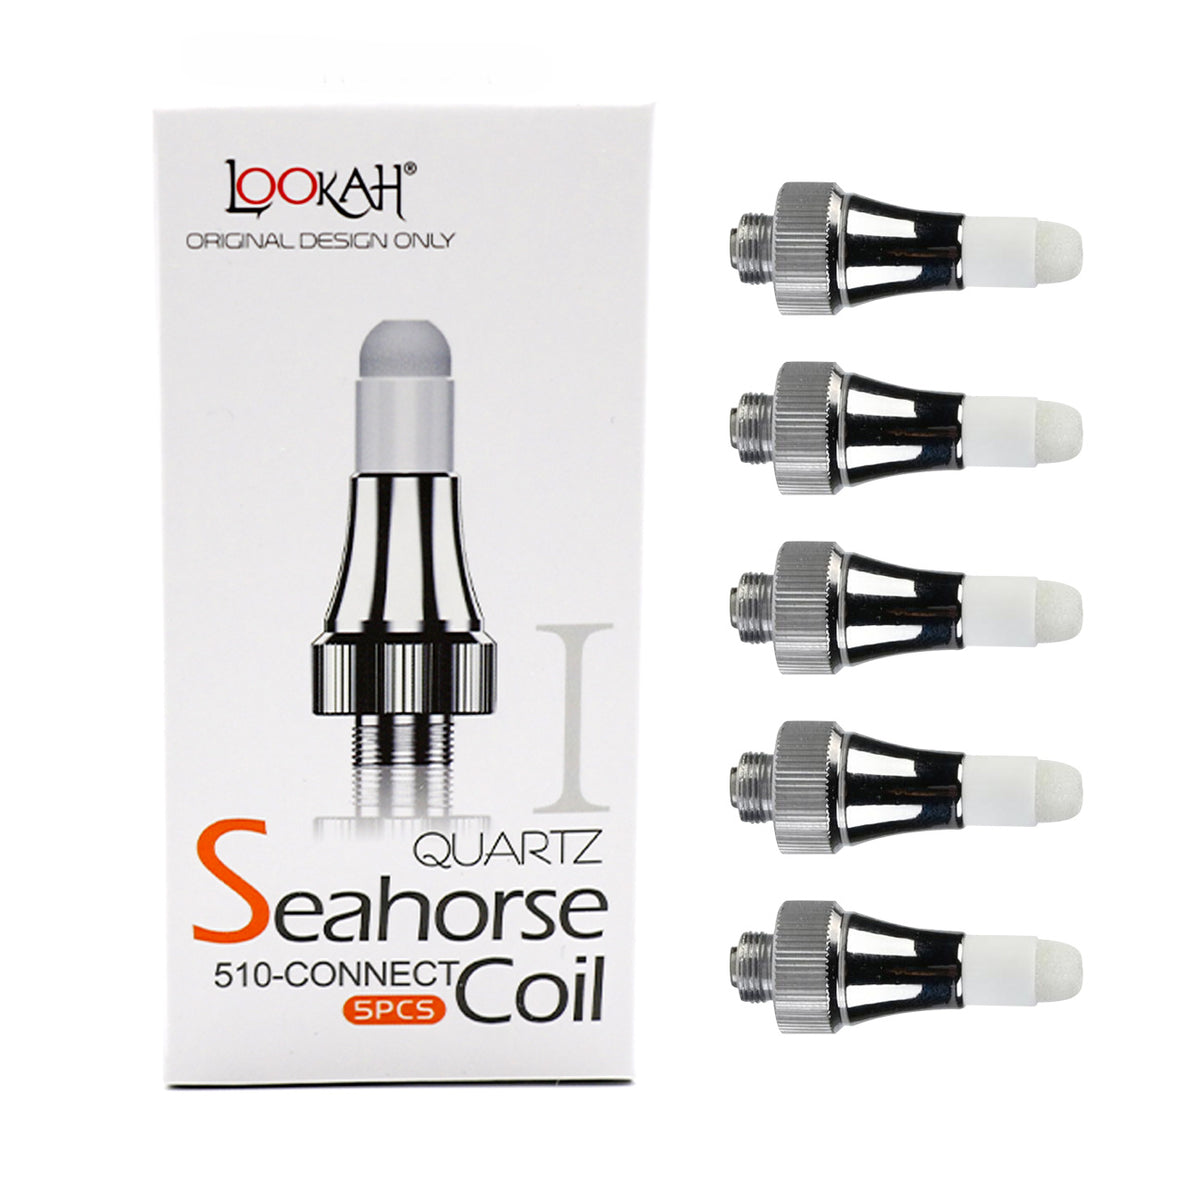 Lookah Seahorse Dab Pen Tip IV - Quartz Tip Coil: 5 Pieces